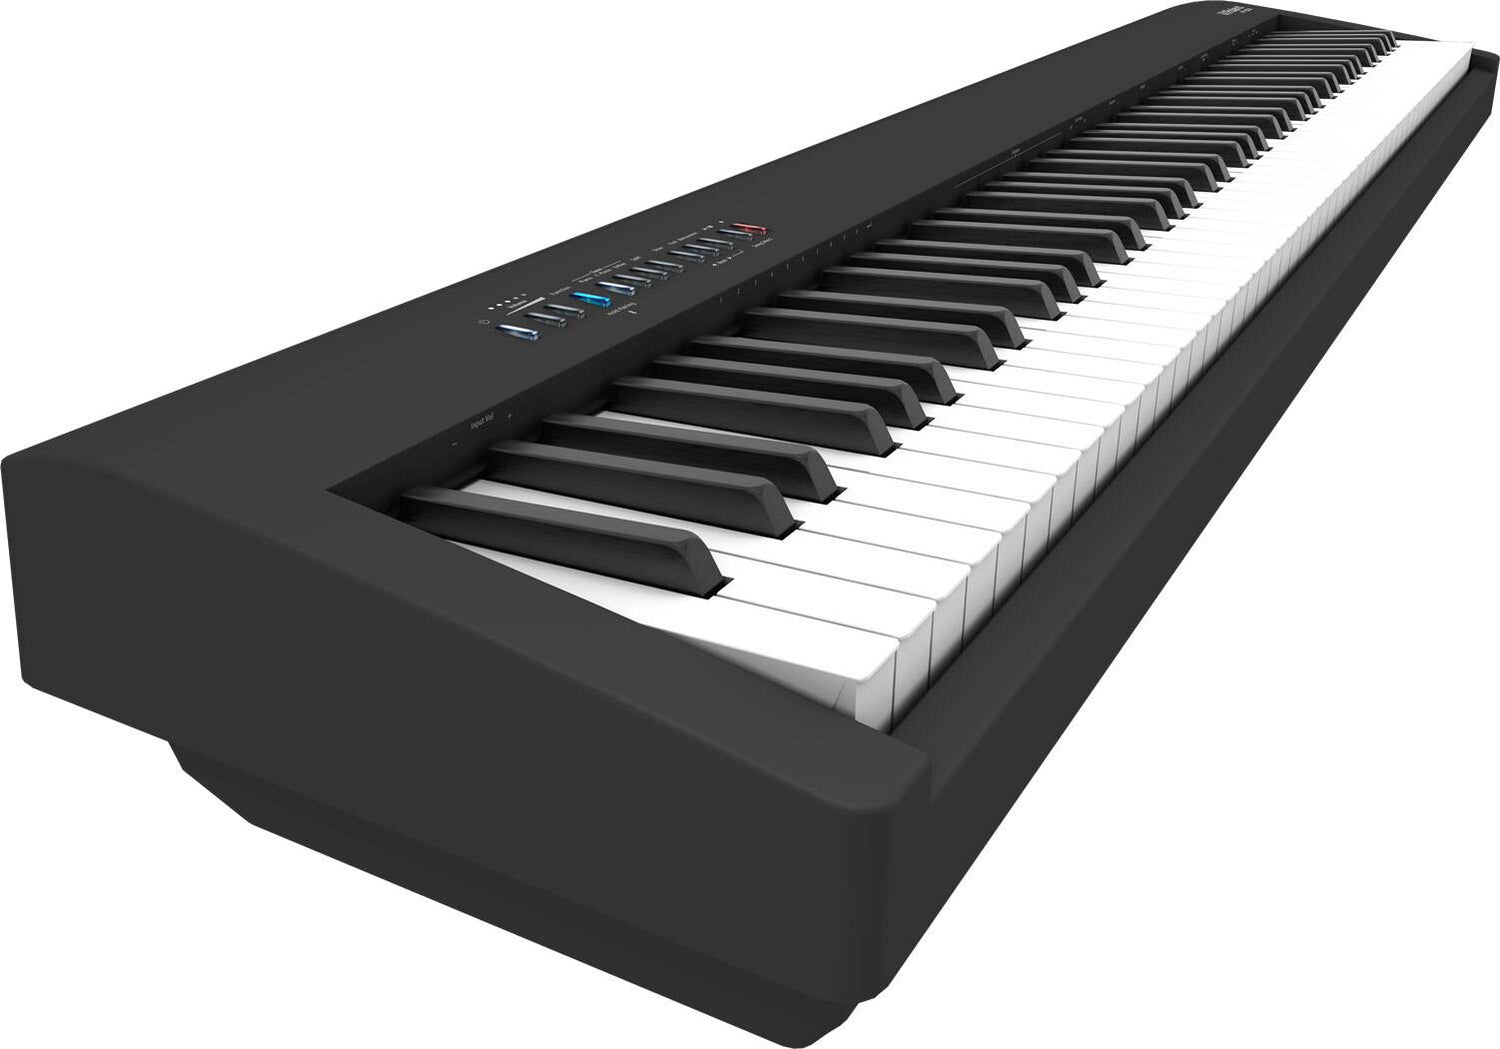 Roland piano digital FP-30X tono autentico de 88 teclas negro